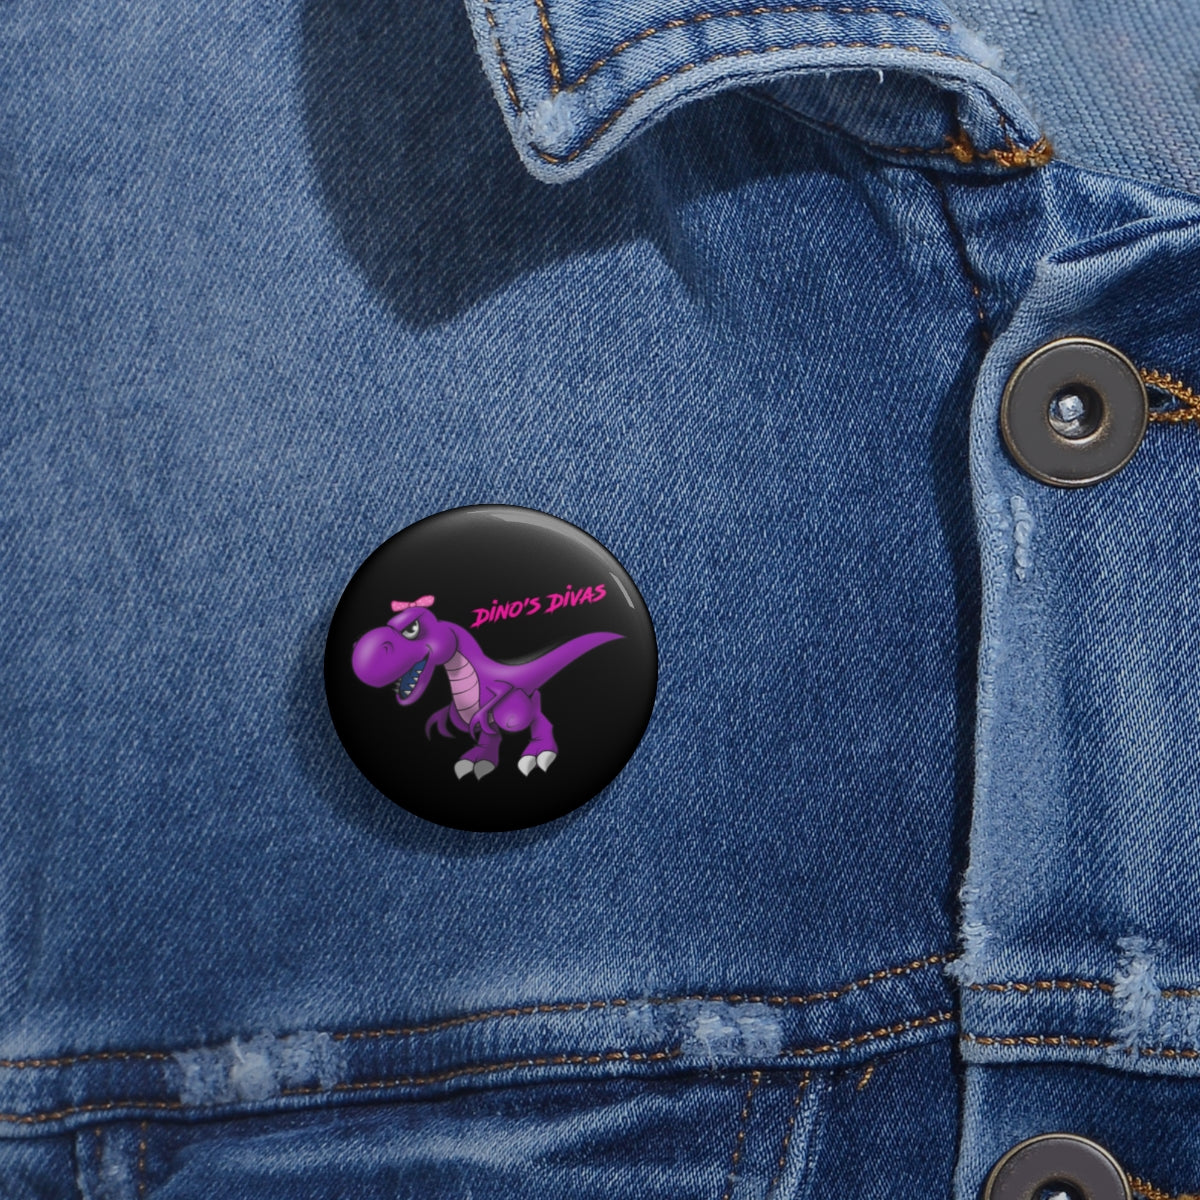 DinoRC Diva Custom Pin Buttons